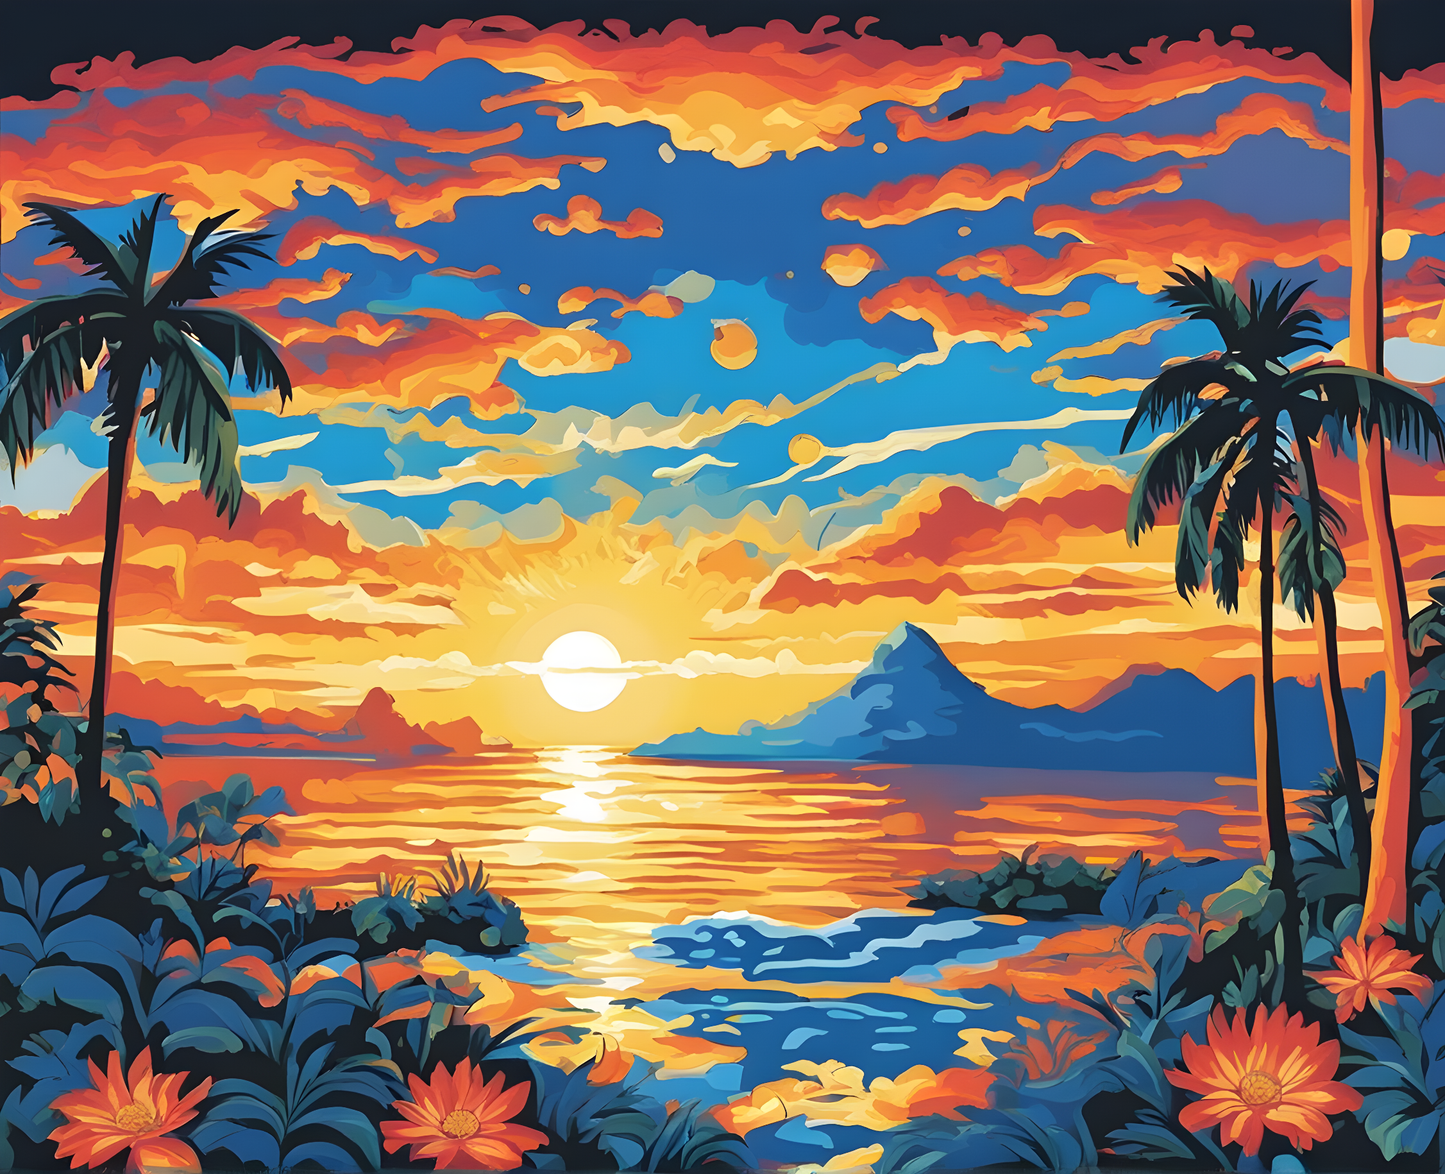 Sunrise in Paradise - Van-Go Paint-By-Number Kit